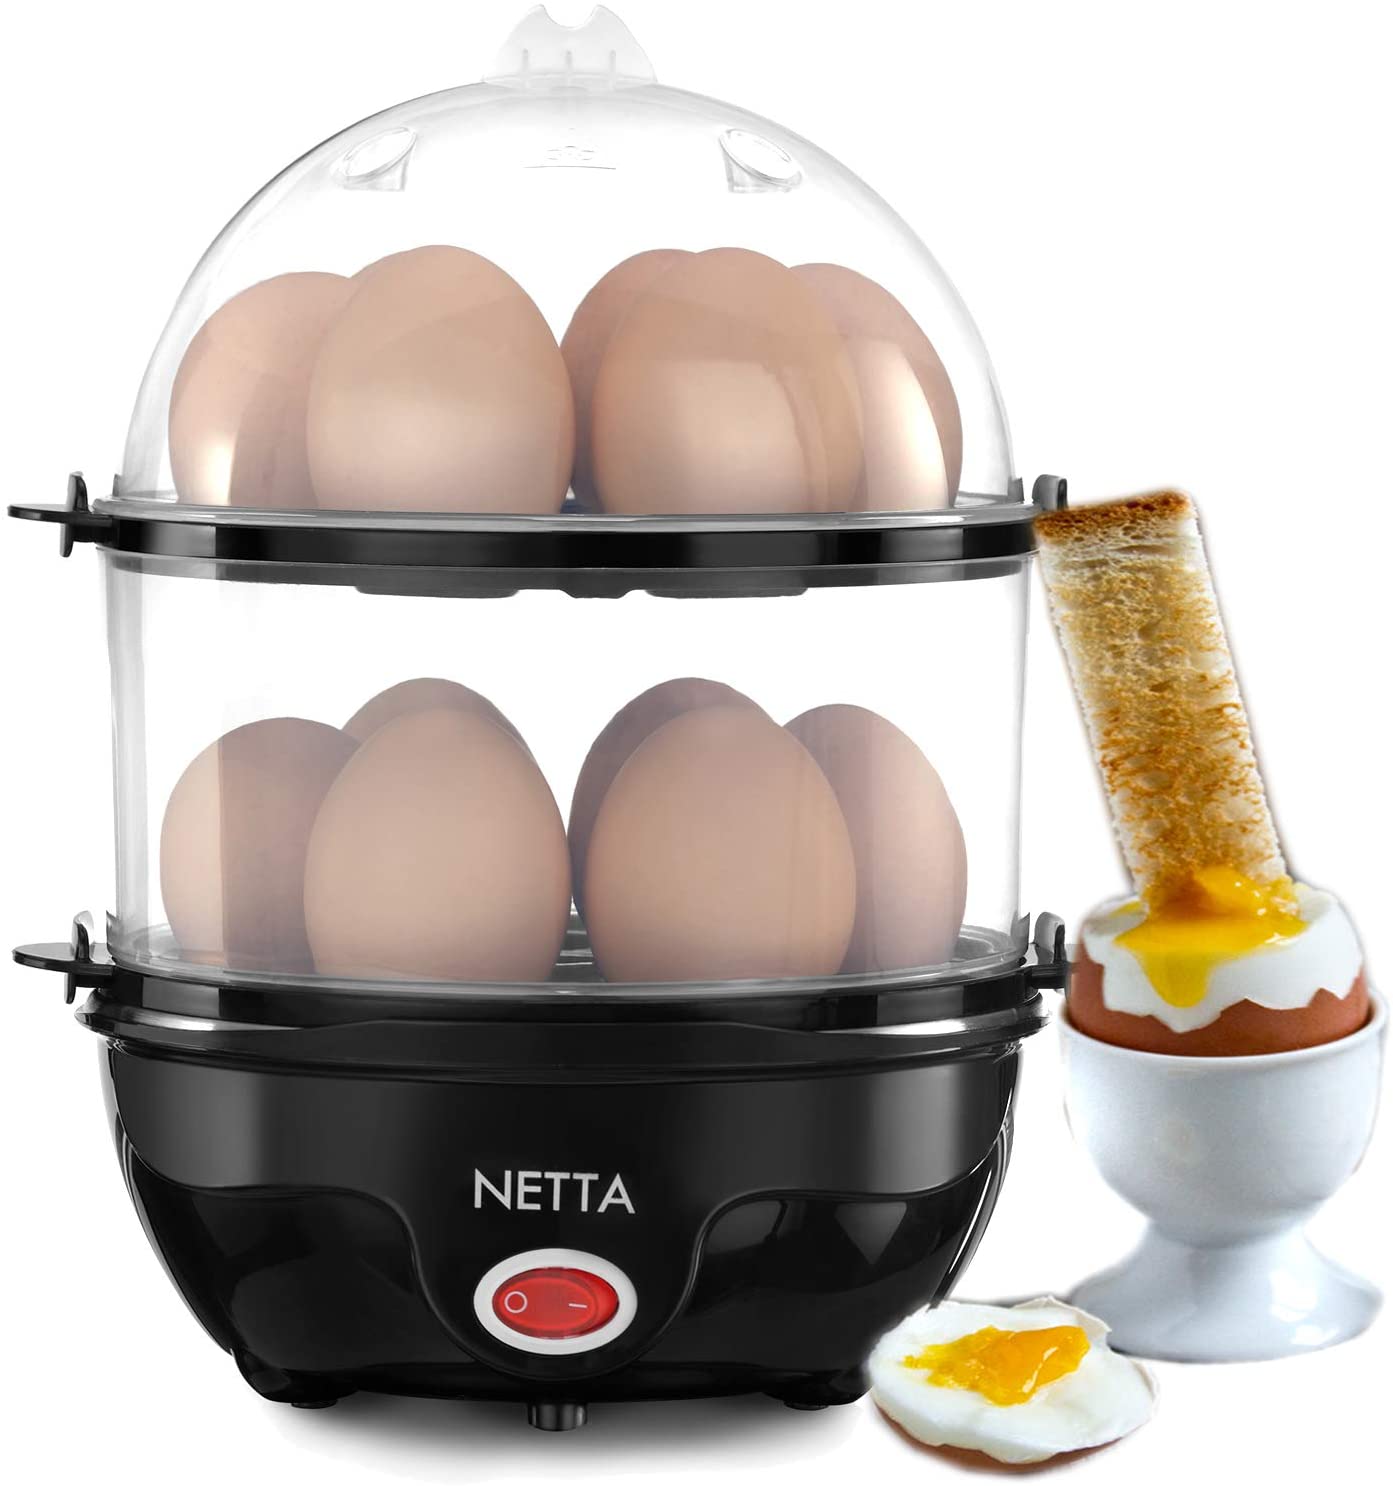 NETTA Electric Egg Poacher Poacher 14 Eggs / Water Measuring Cup and Egg Cutter 350W